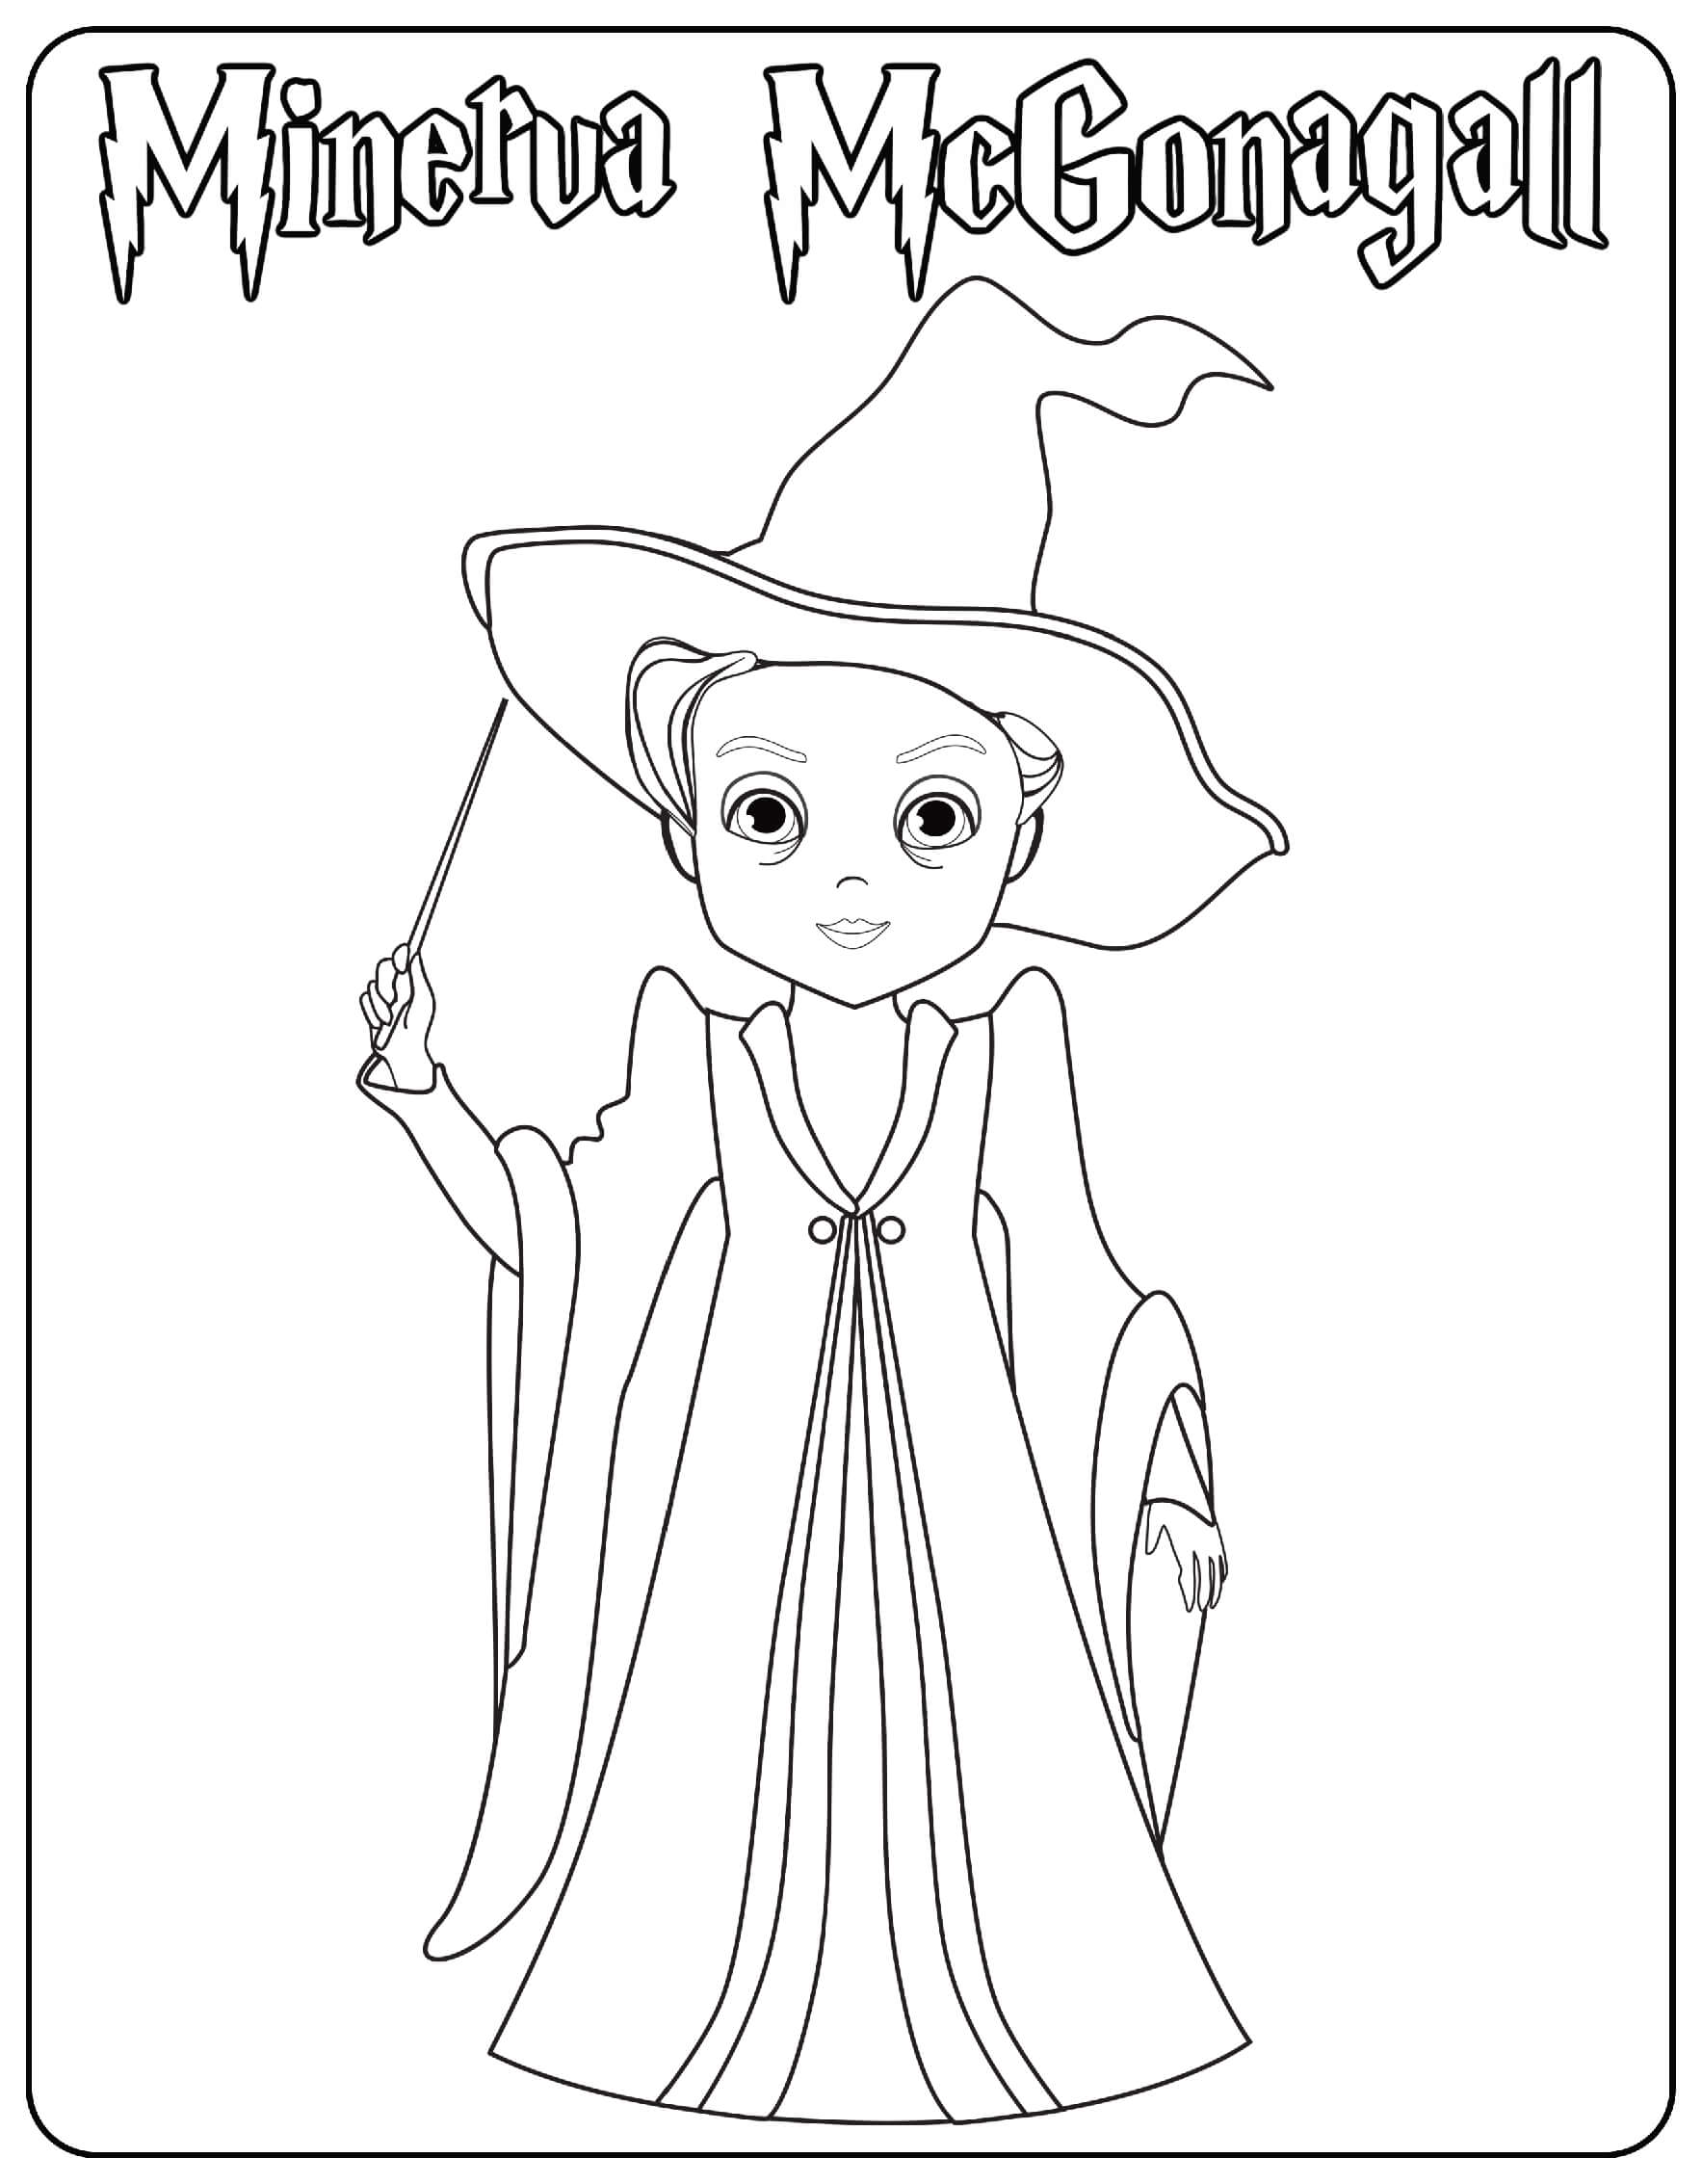 Minerva McGonagall Coloring Page